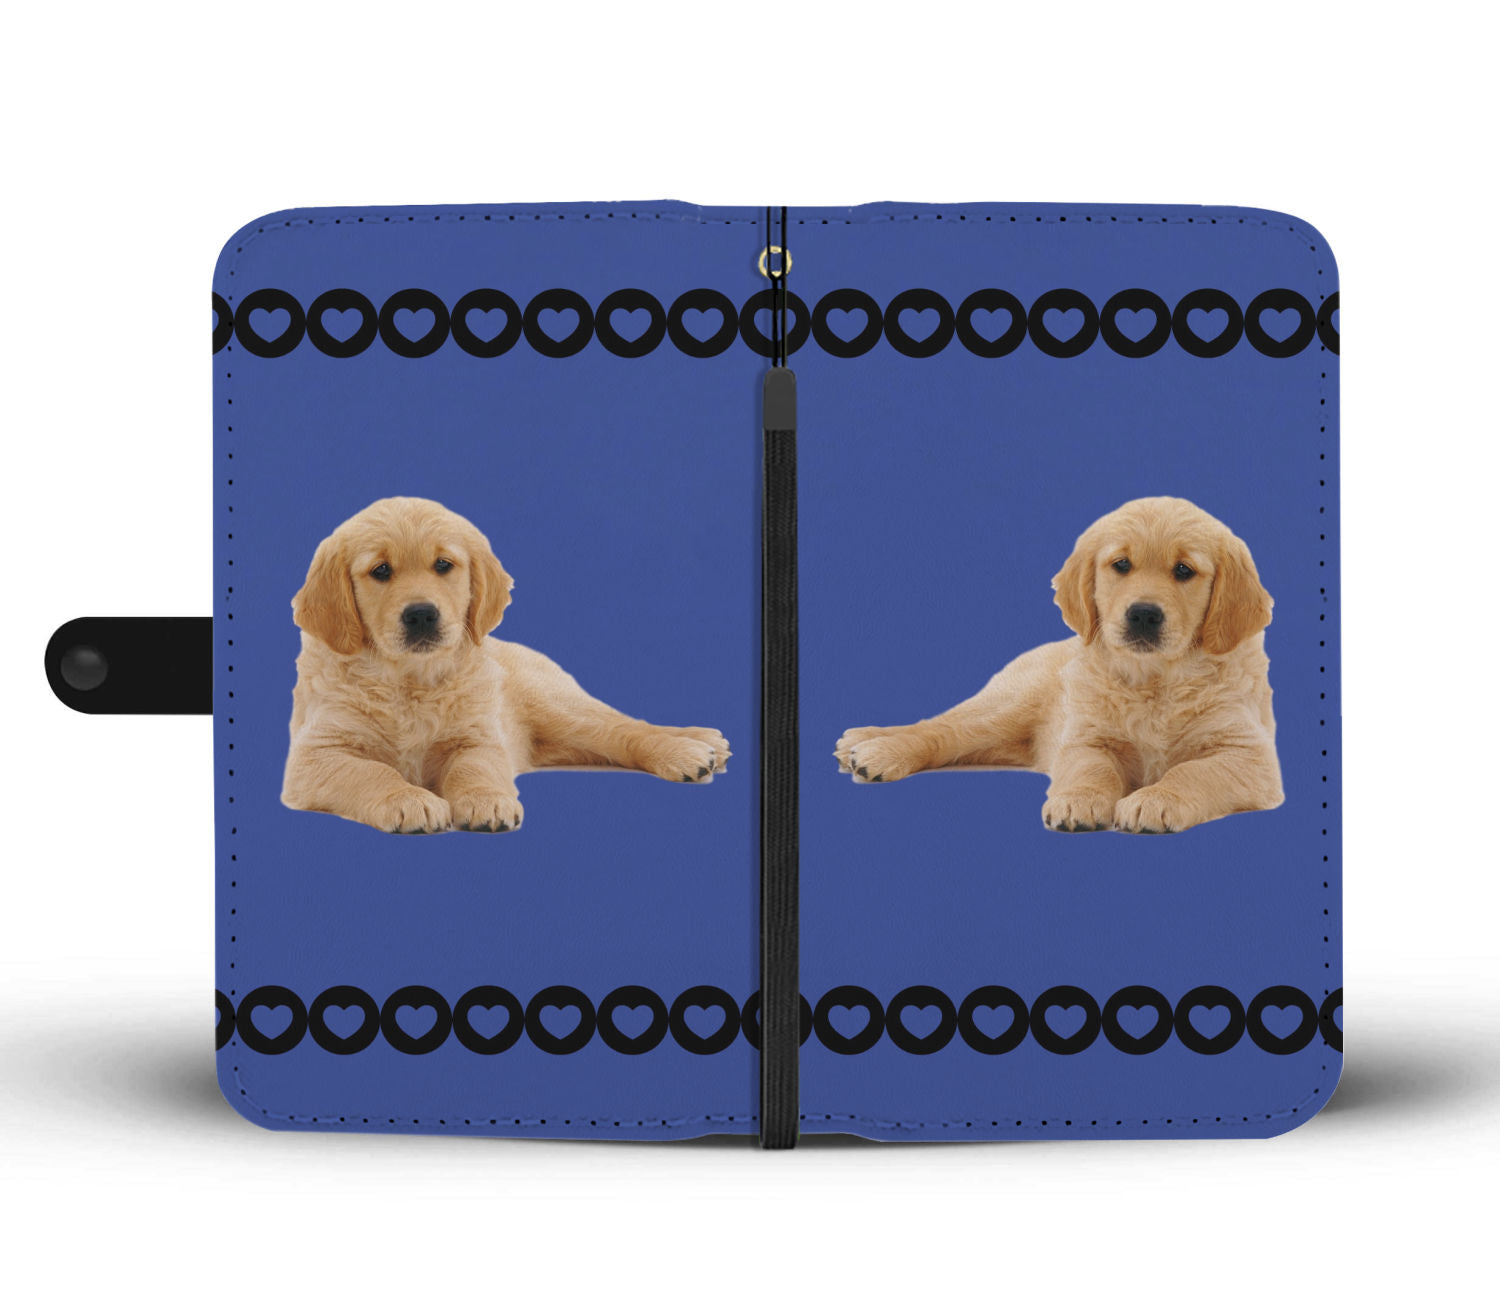 Golden Retriever Phone Case Wallet - Puppy